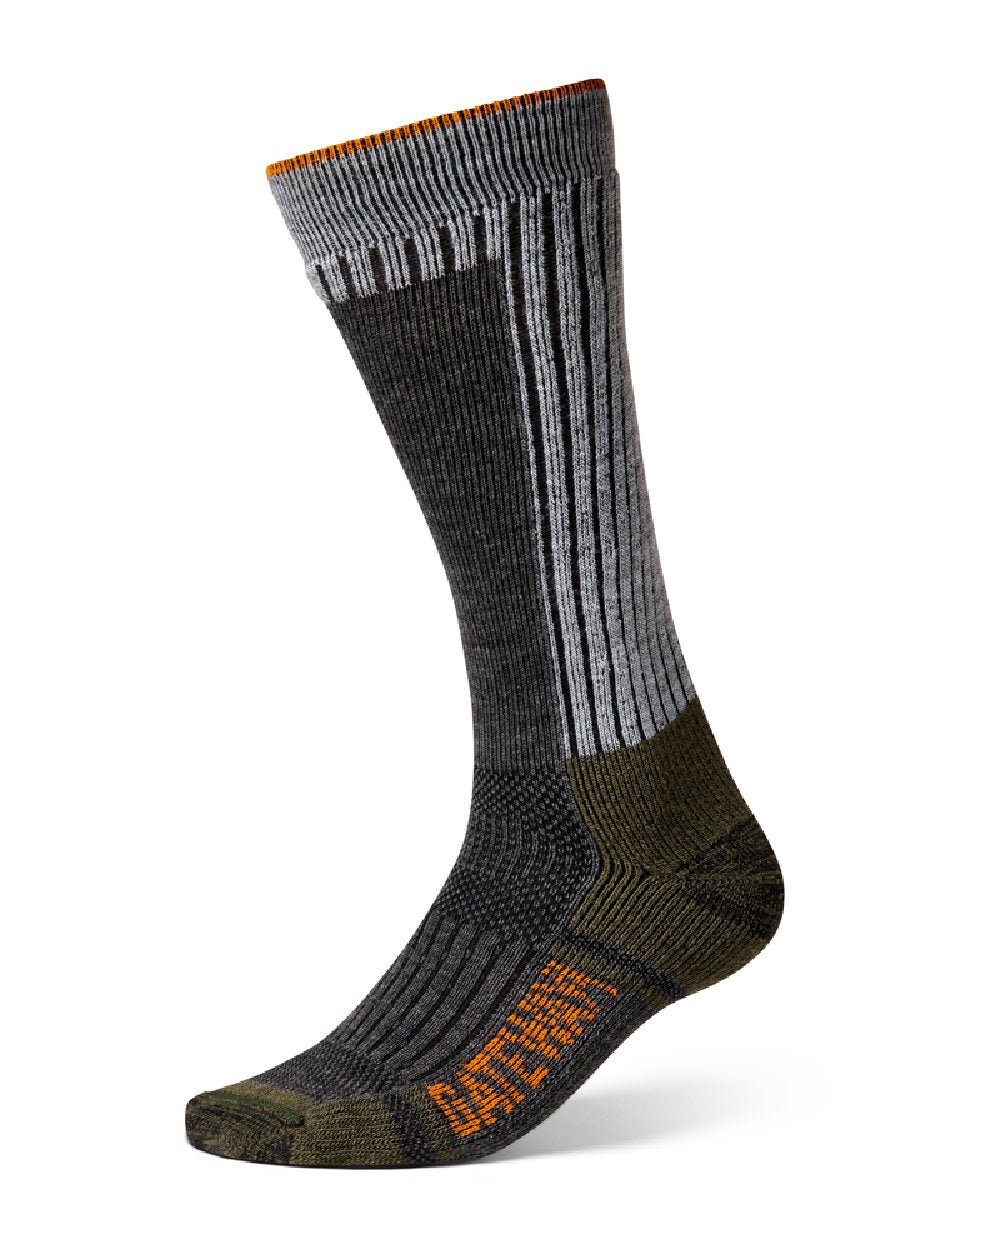 GateWay 1 Boot Calf Sock in Olive Grey